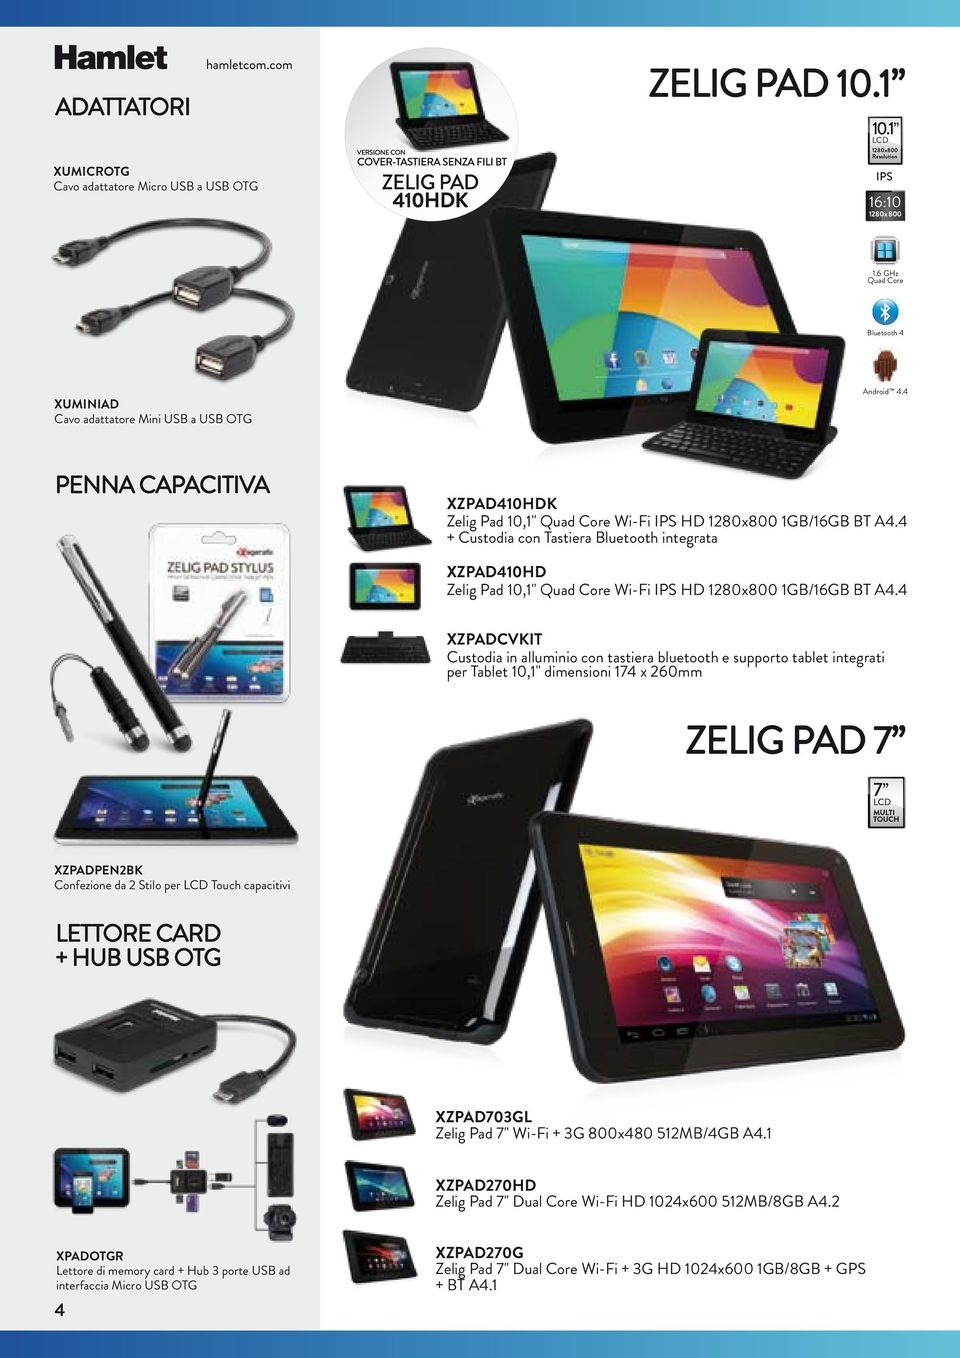 4 + Custodia con Tastiera Bluetooth integrata XZPAD410HD Zelig Pad 10,1" Quad Core Wi-Fi IPS HD 1280x800 1GB/16GB BT A4.